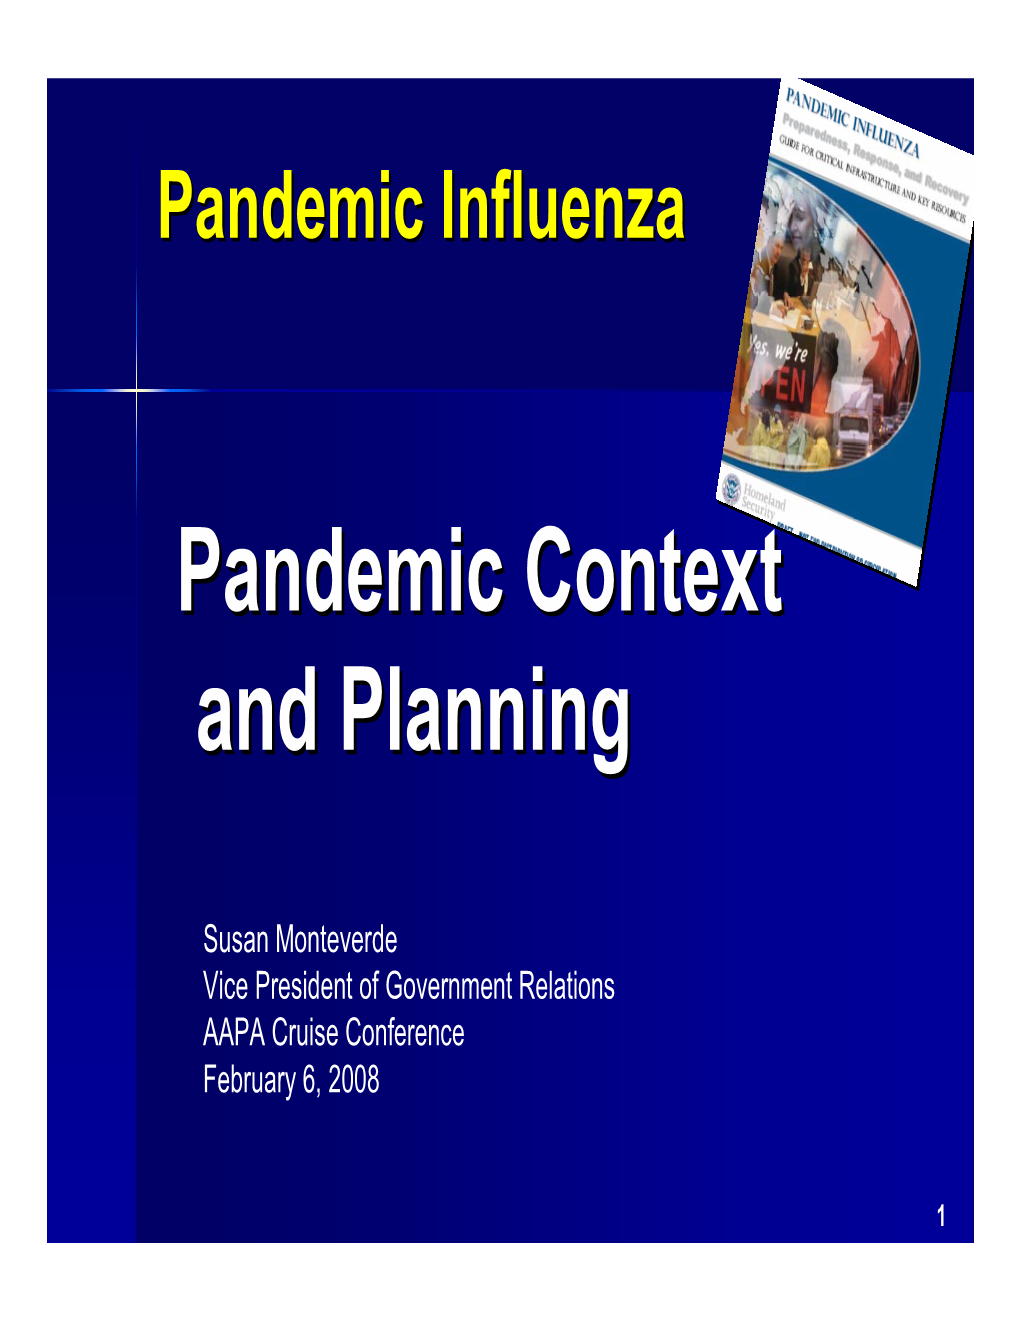 Influenza Pandemic Context